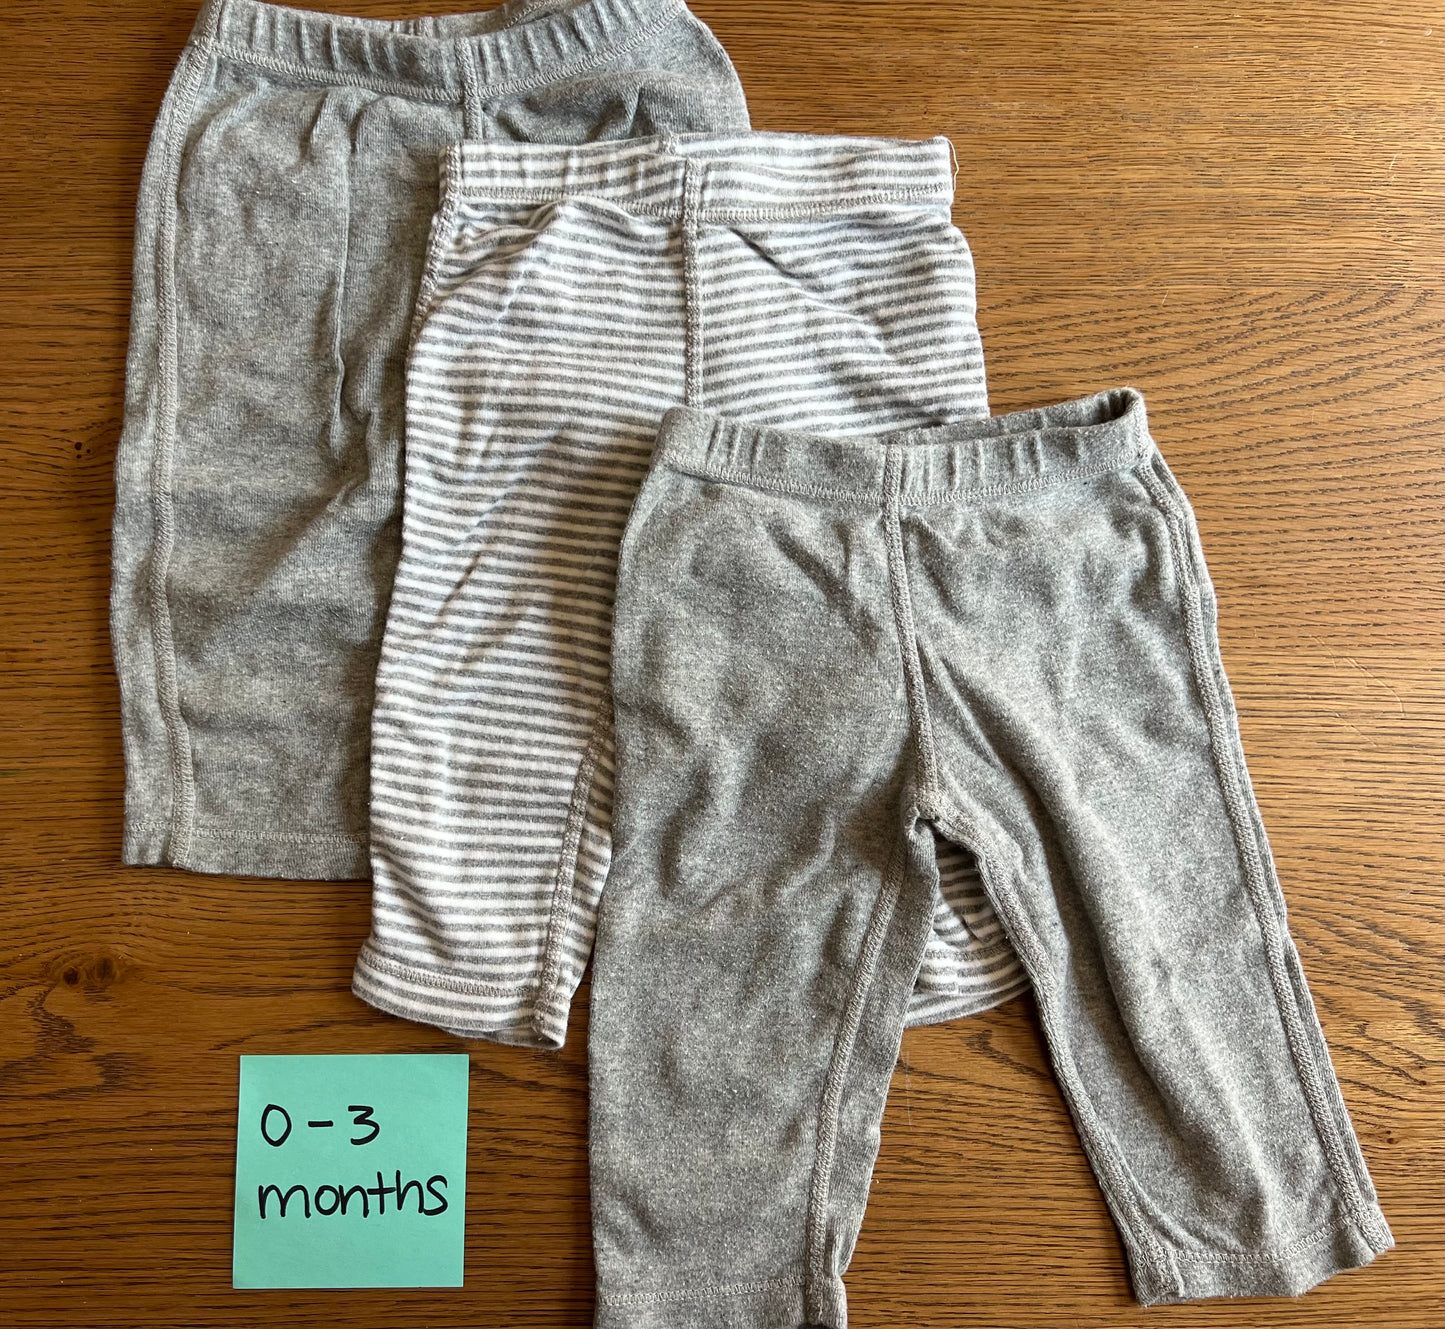 Burt’s Bees Baby pants 0-3 months